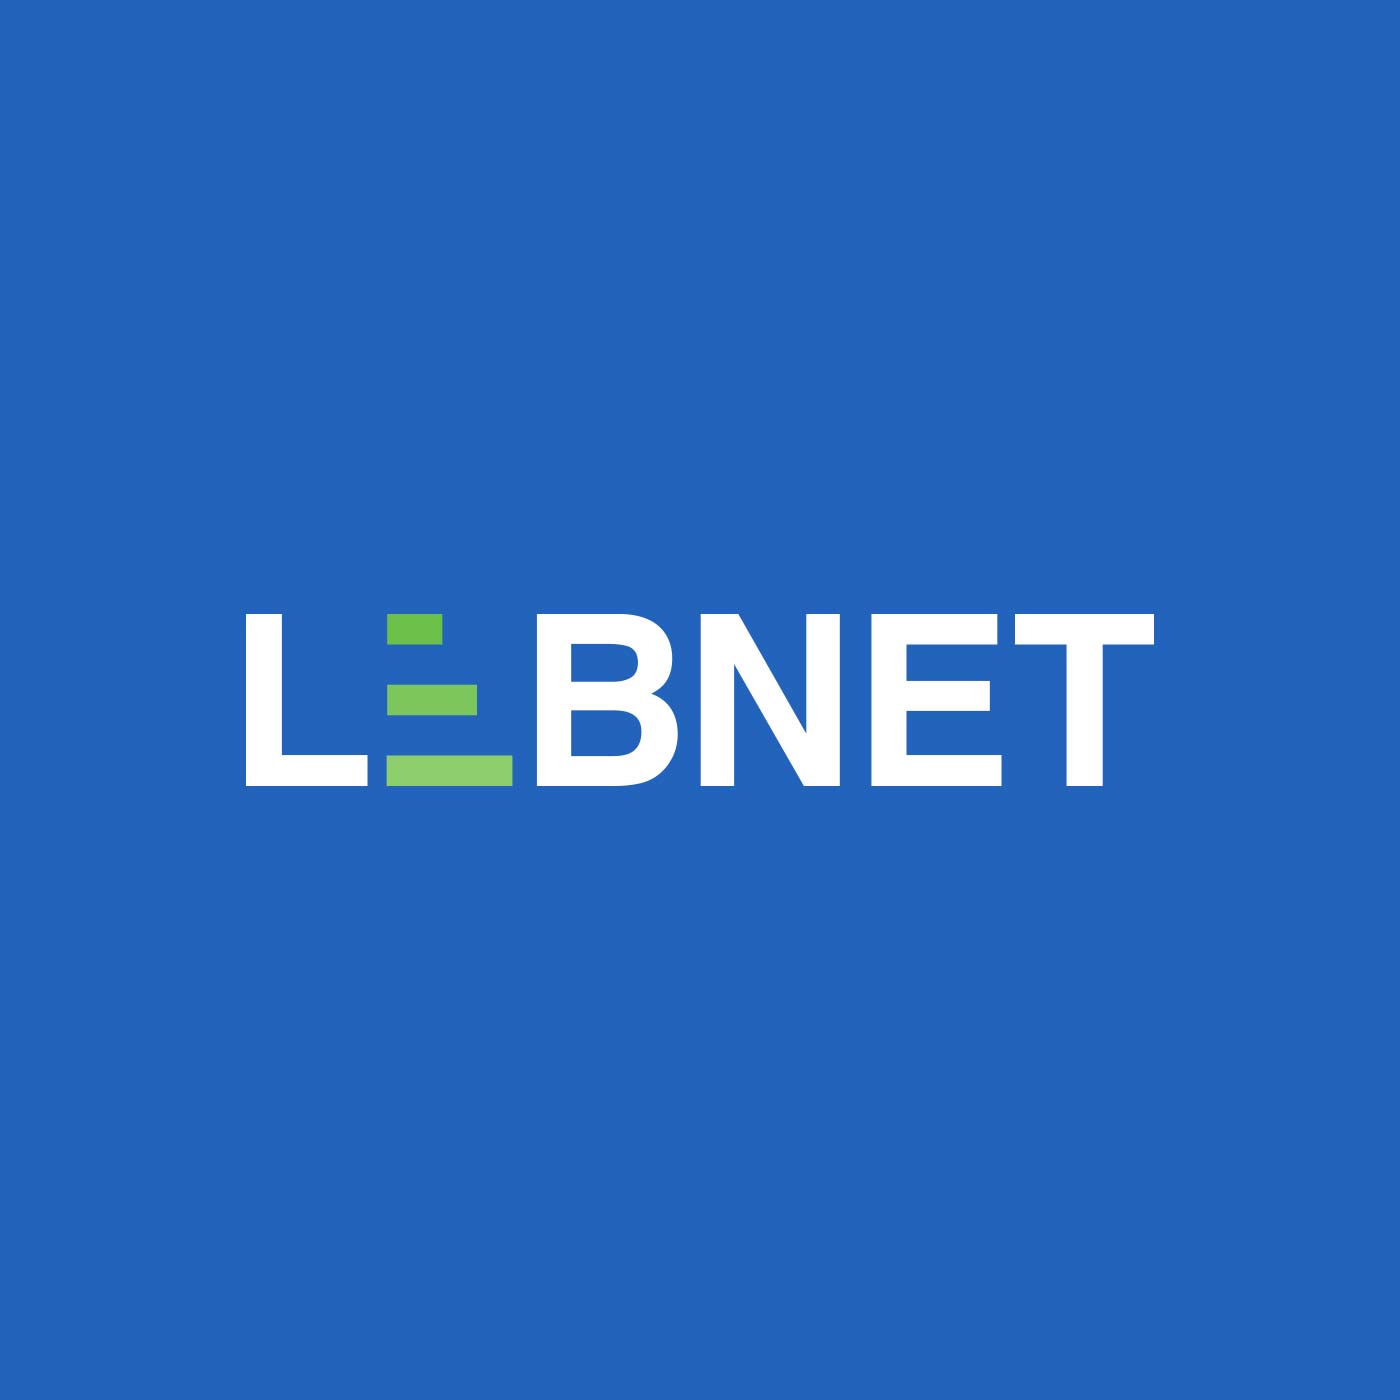 LebNet Blanchor